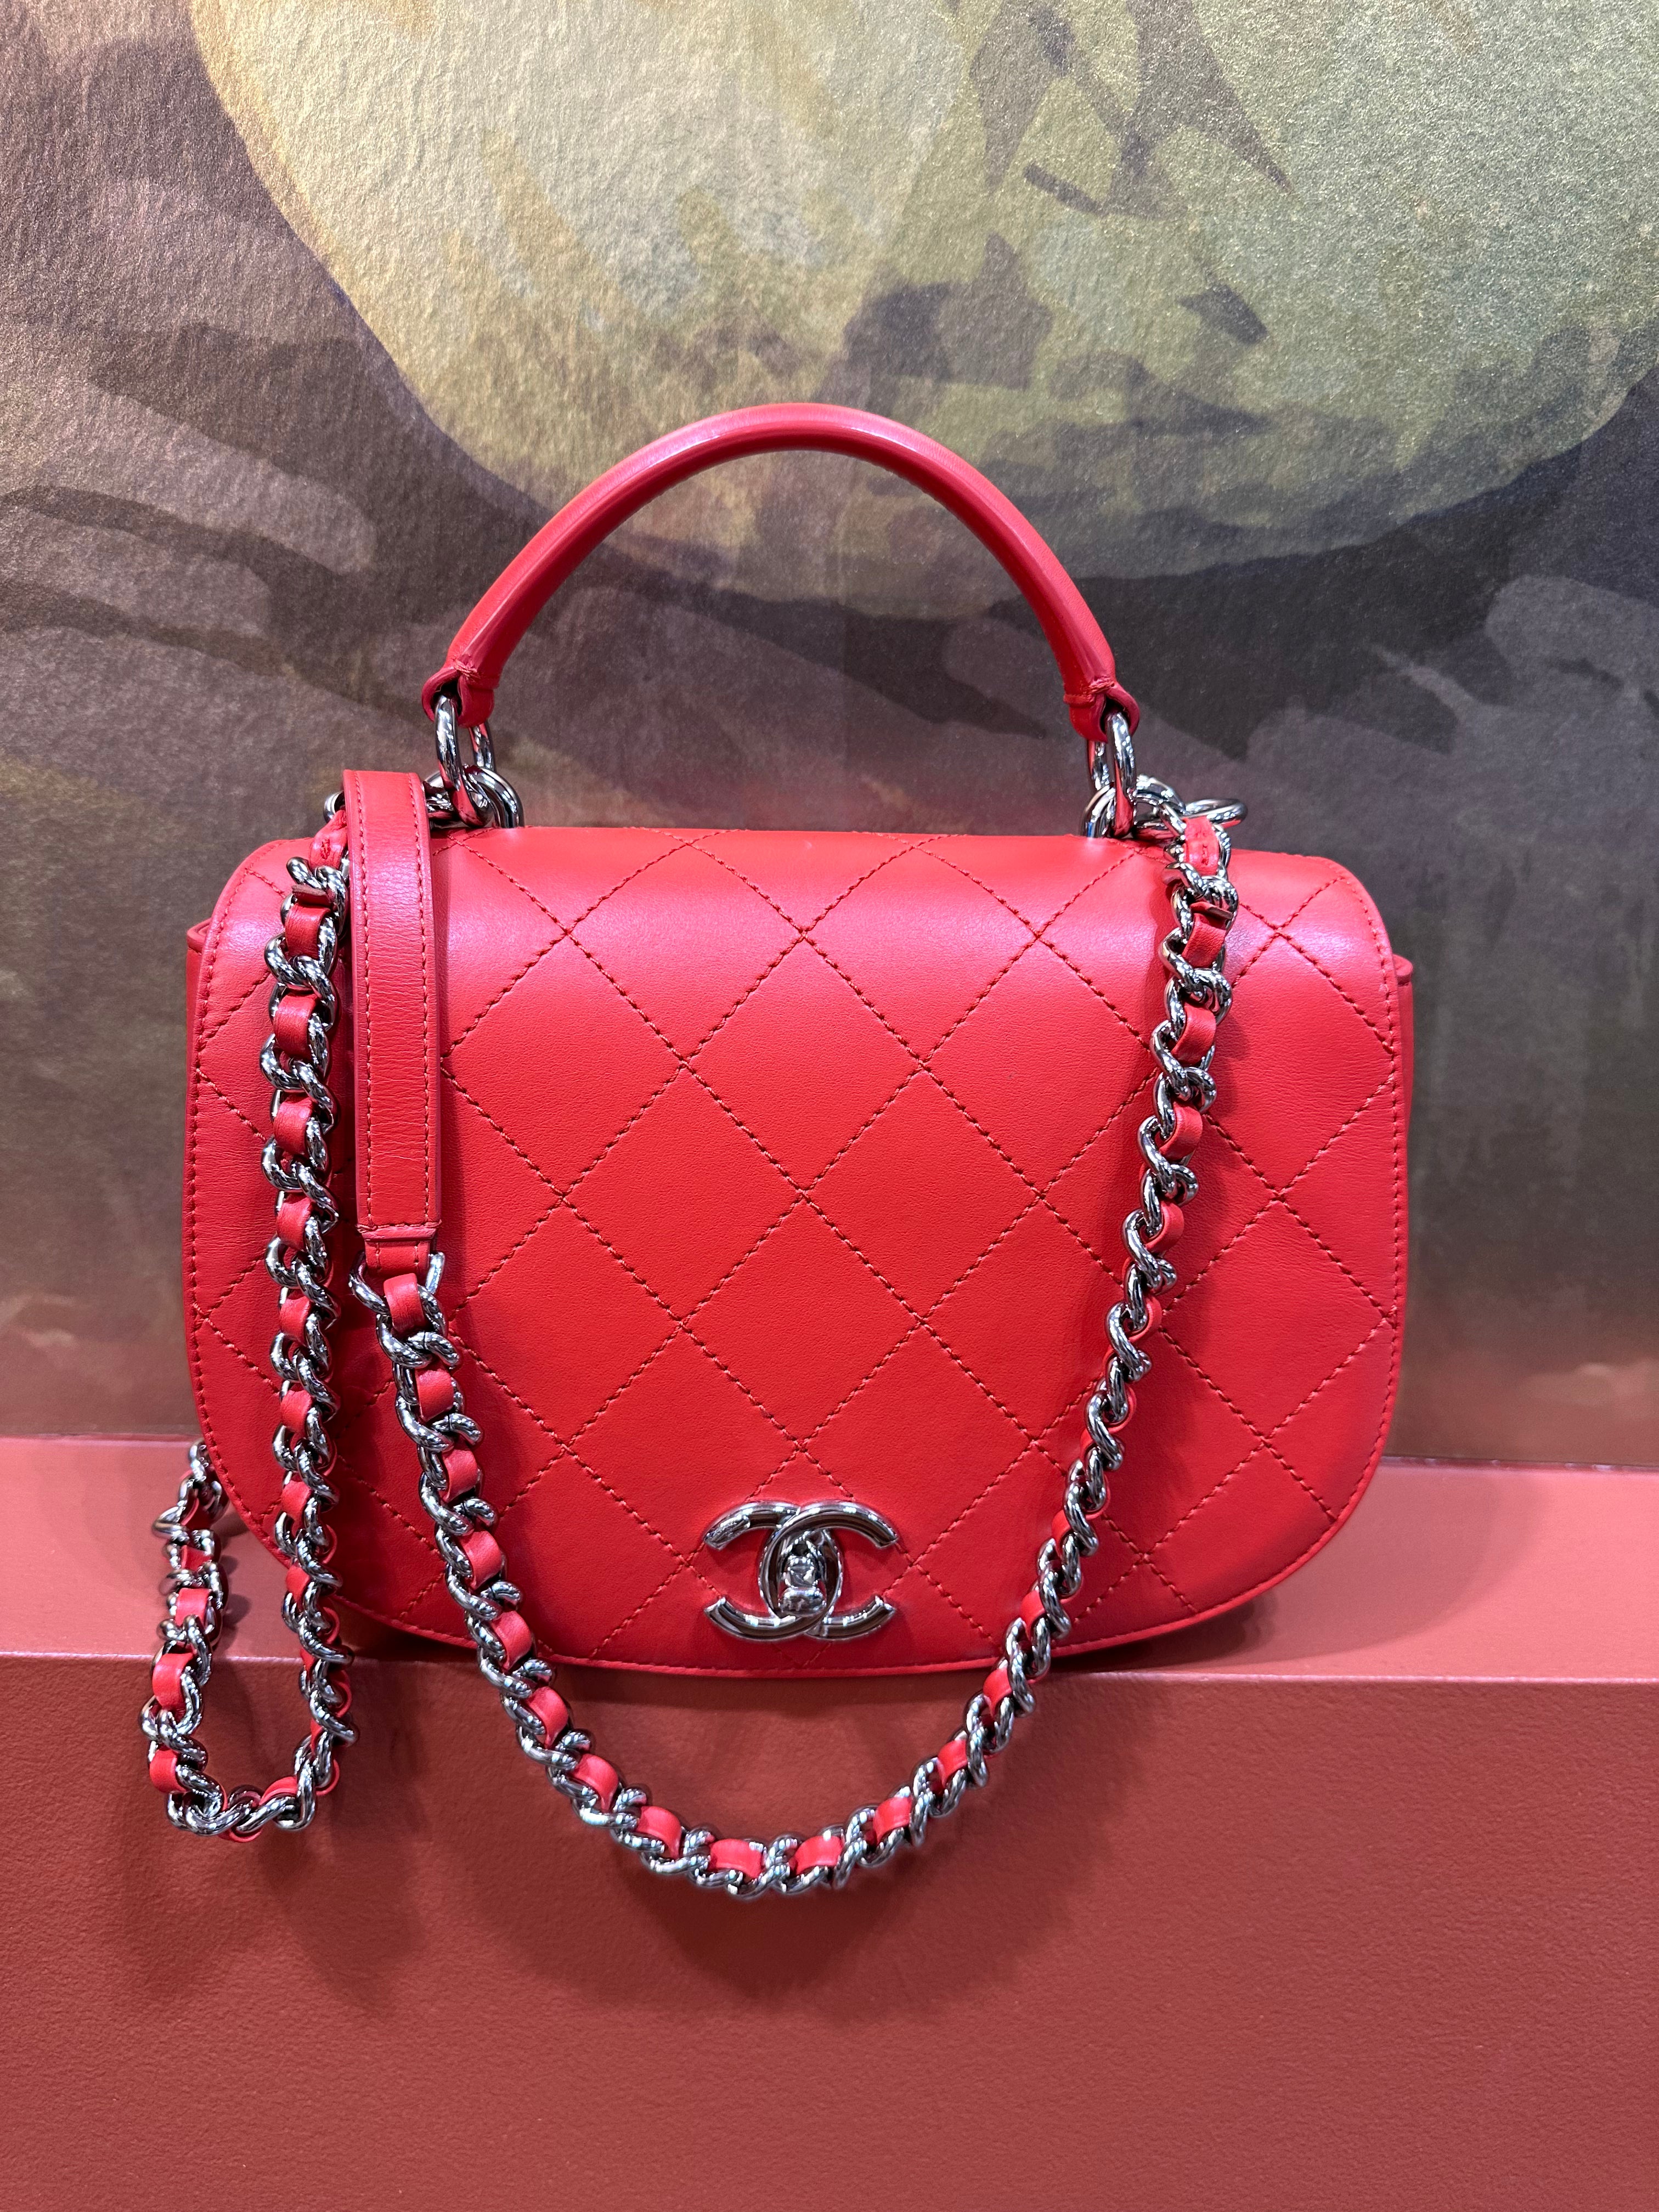 Chanel - Flap bag